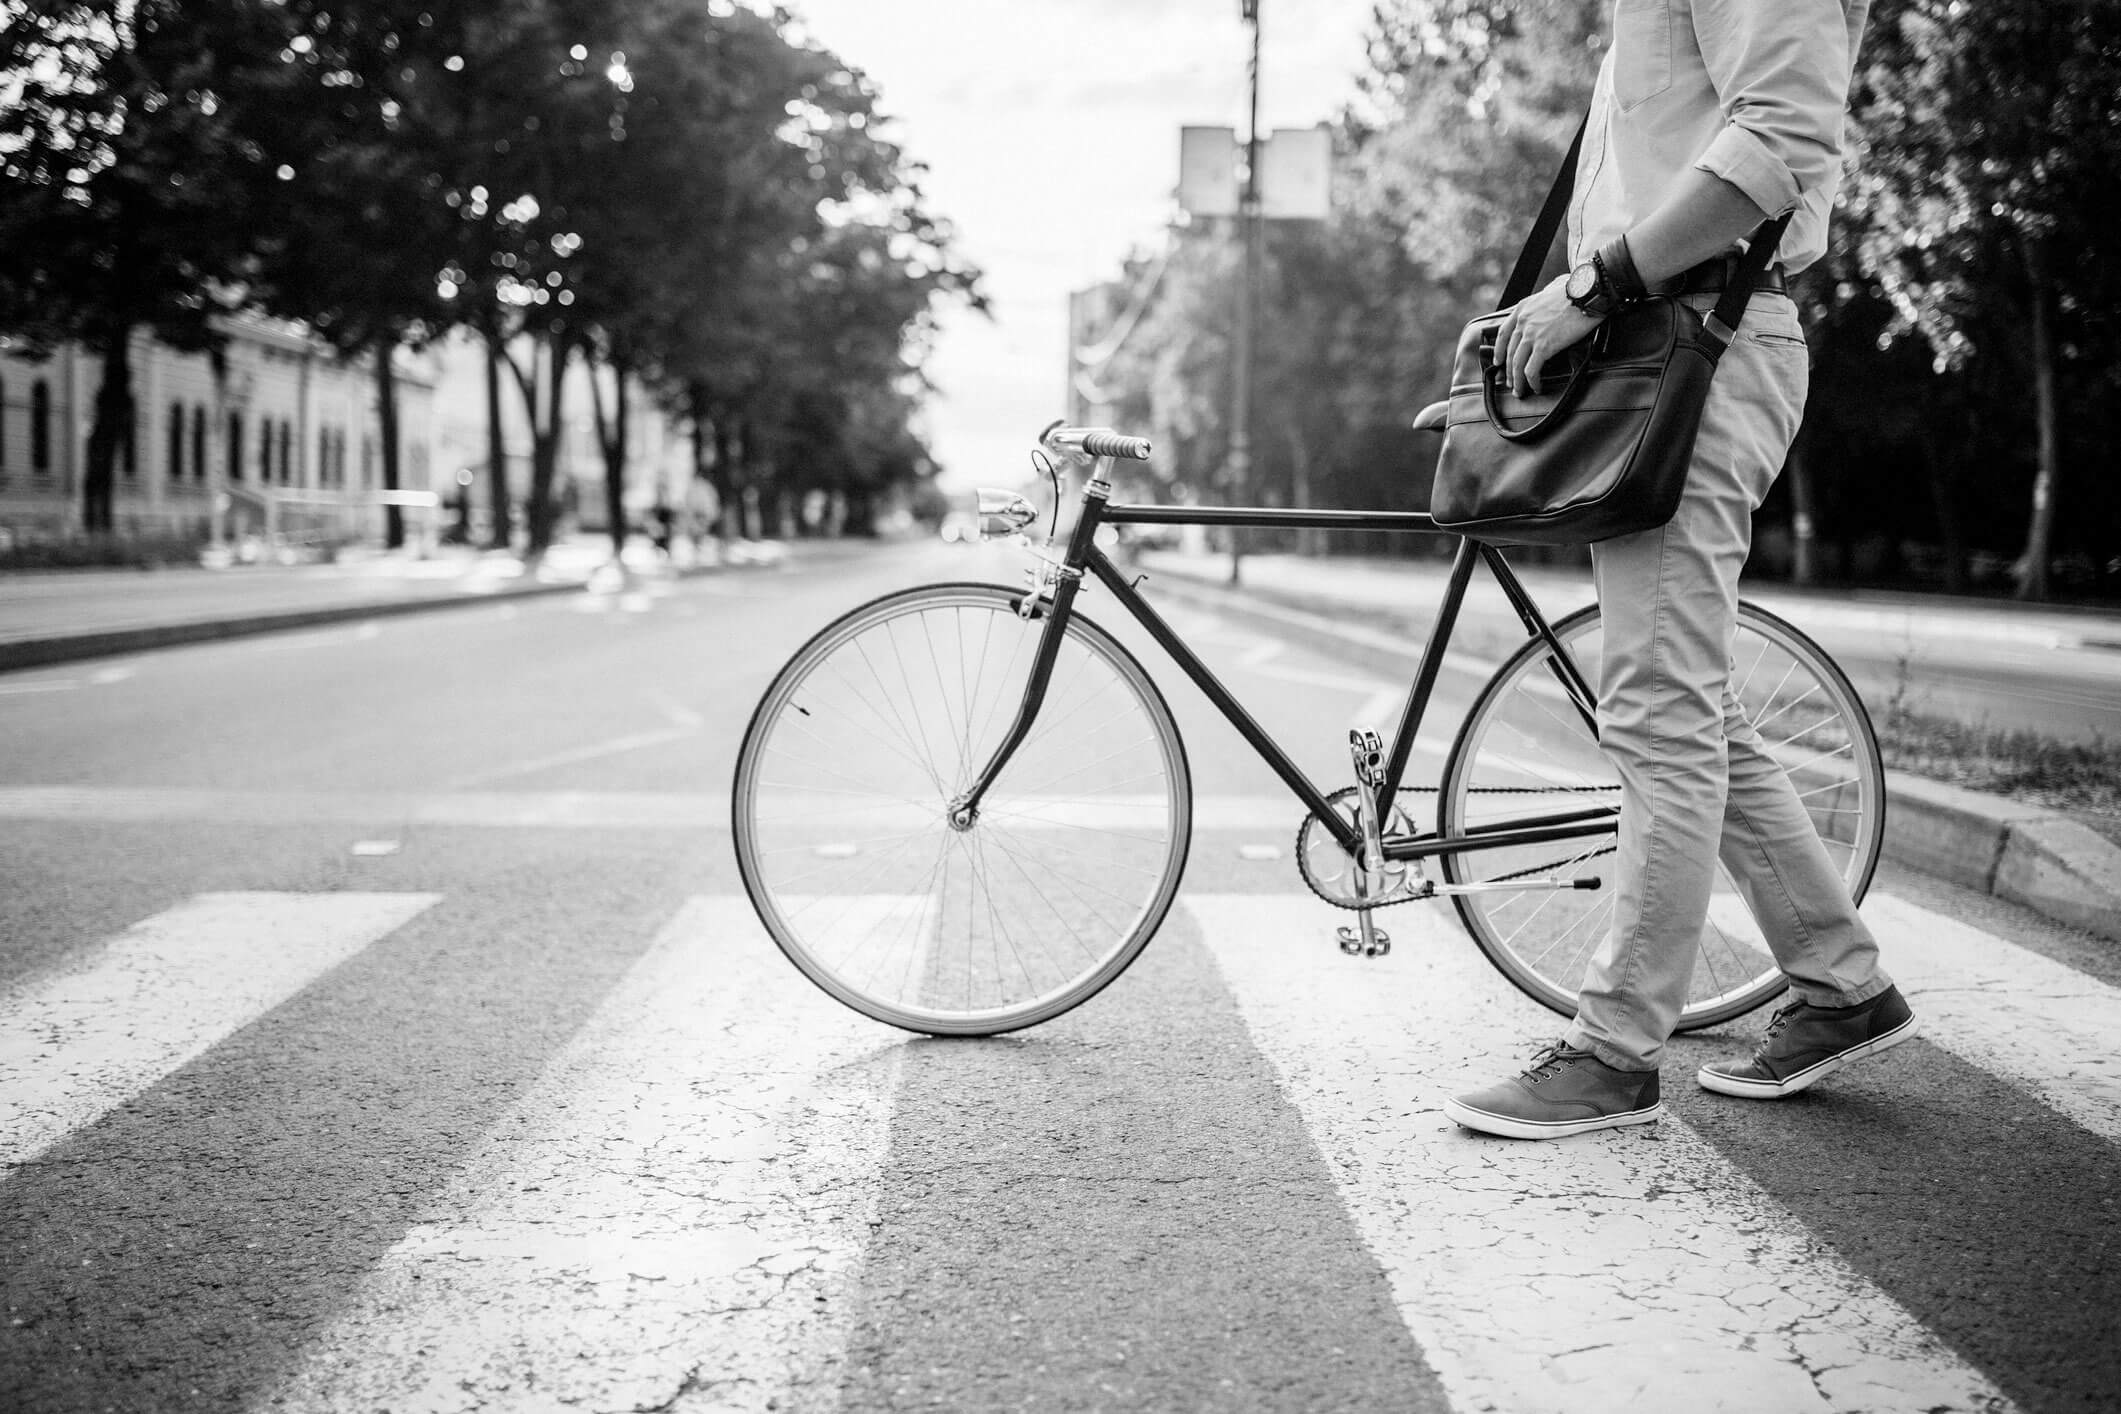 A man walks his bicycle along a crosswalk on a city street.